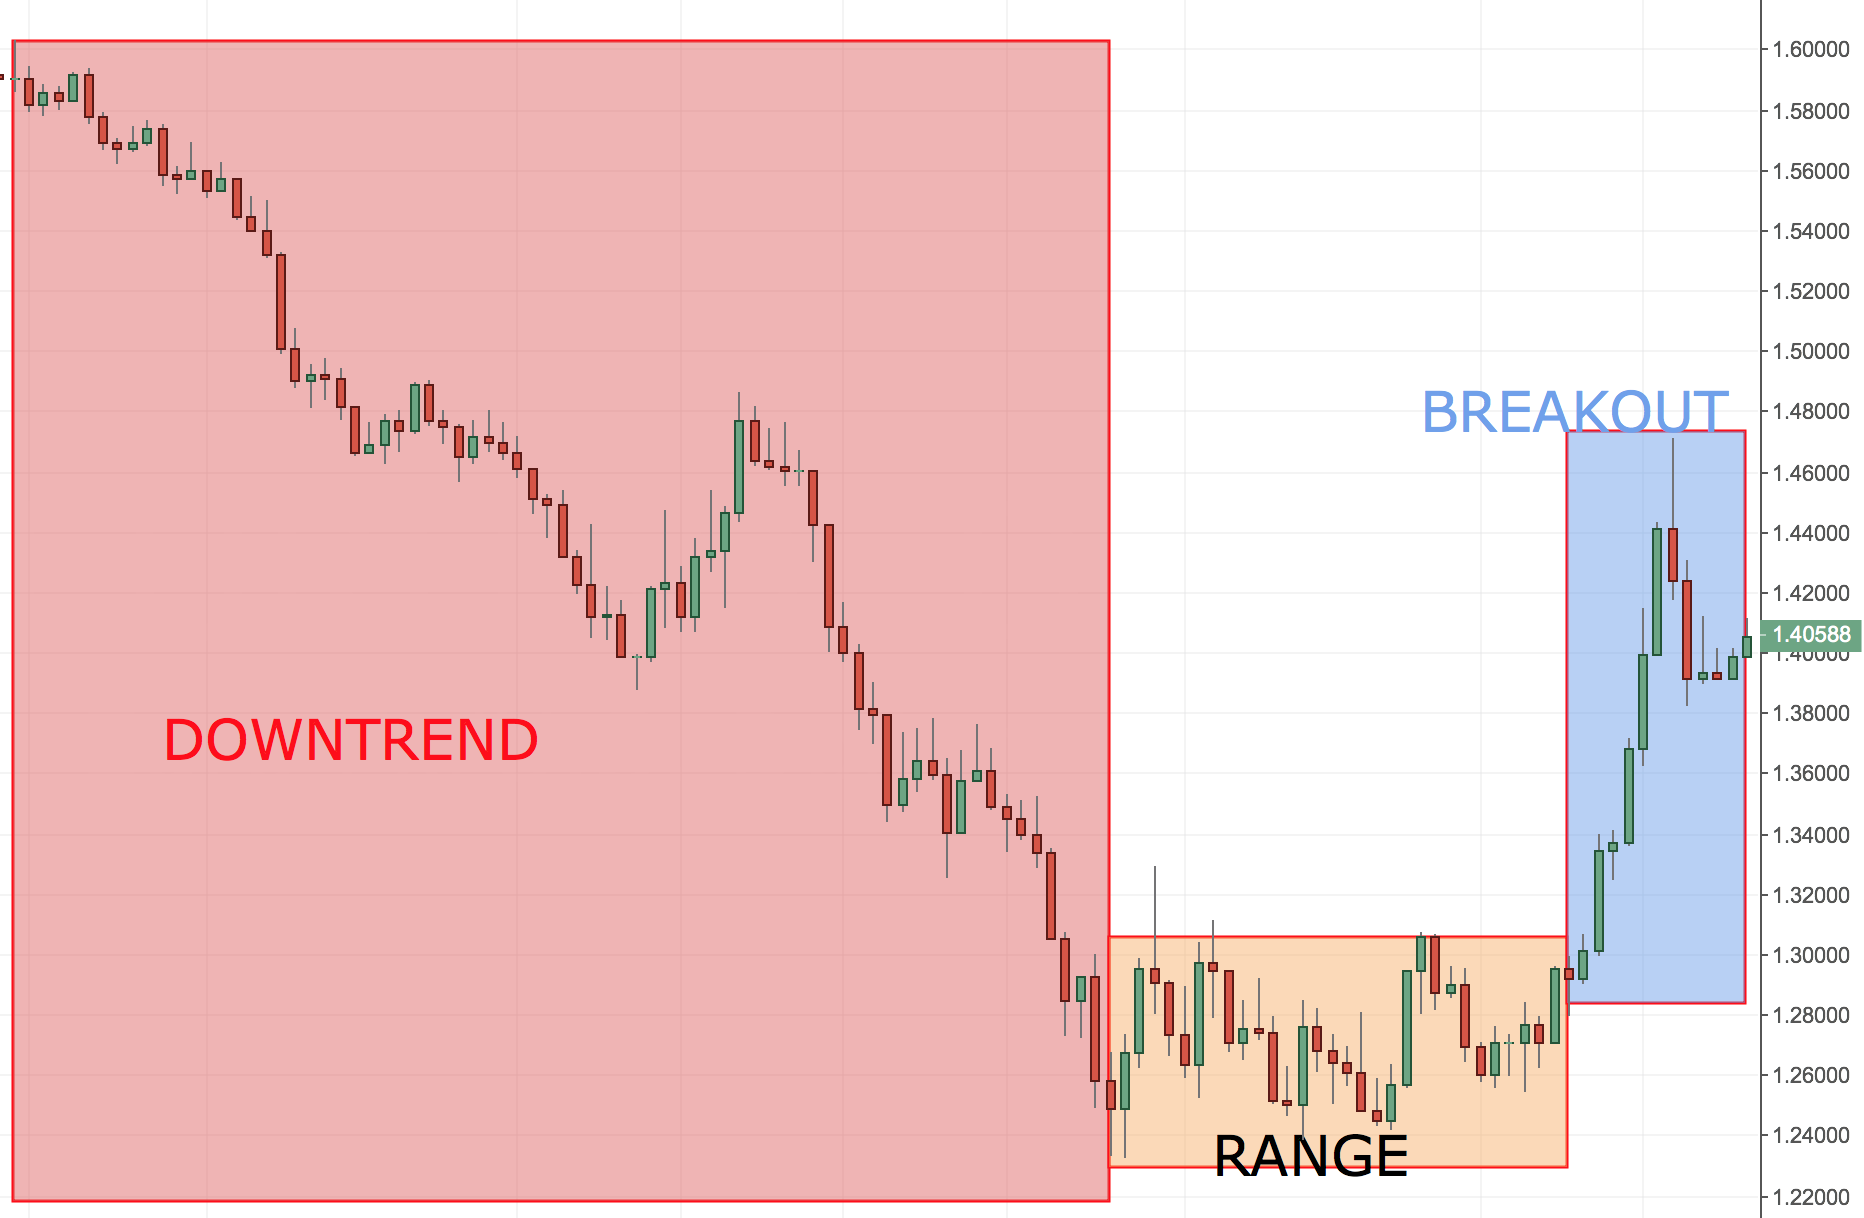 Trend vs Range